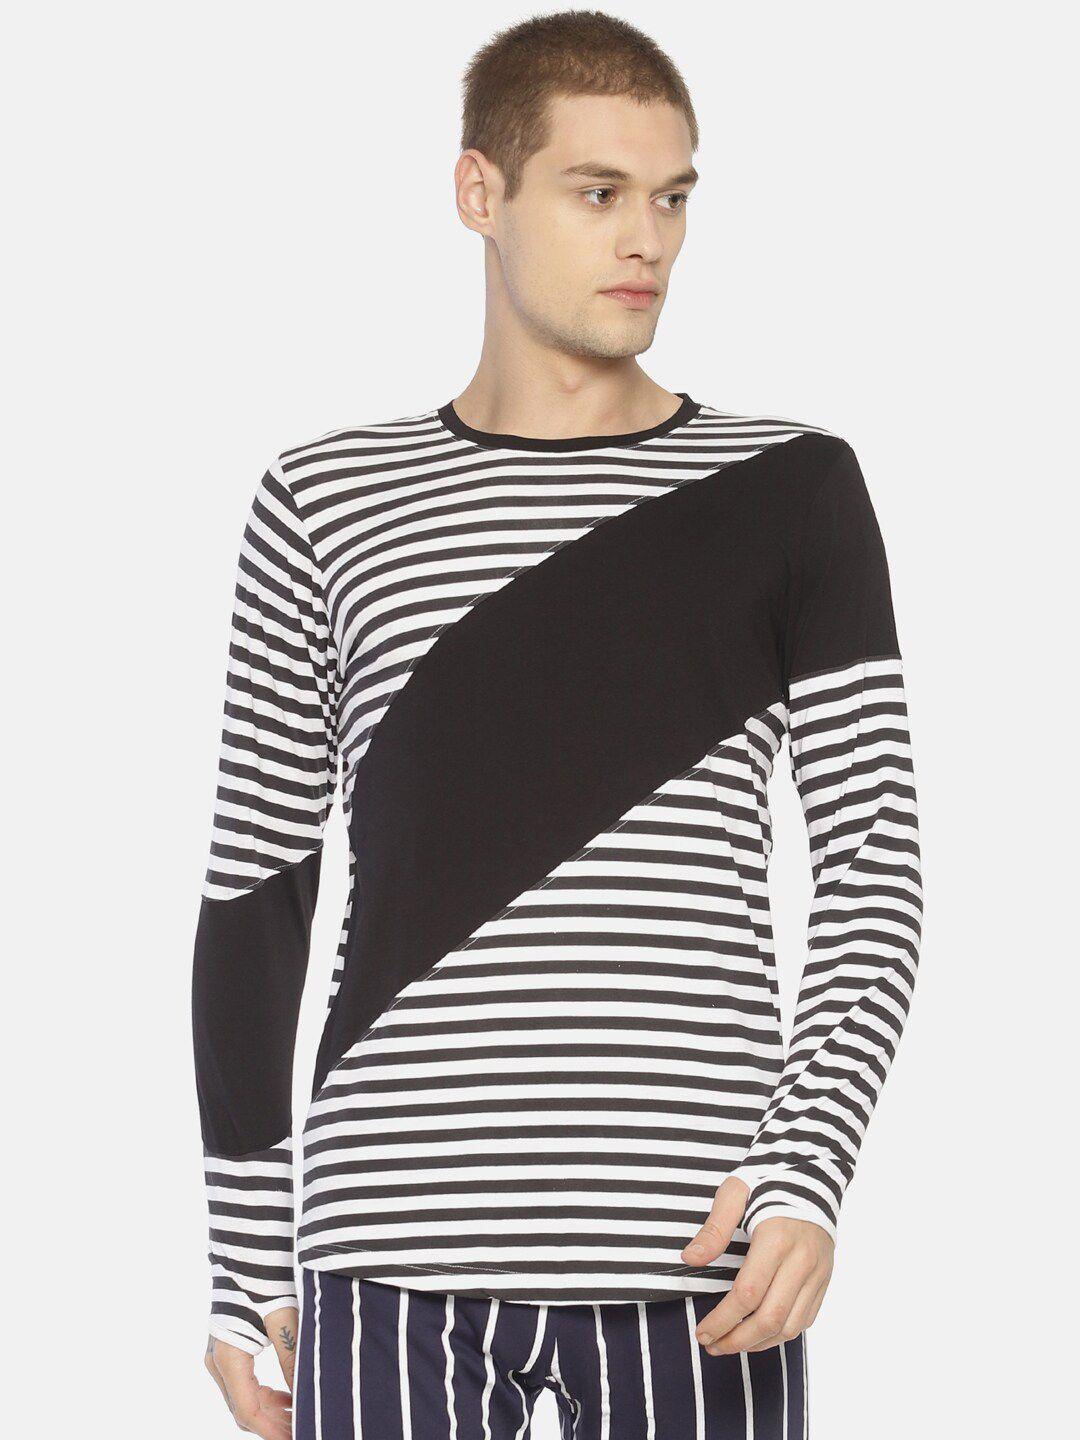 kultprit men black & white striped monochrome pure cotton slim fit t-shirt